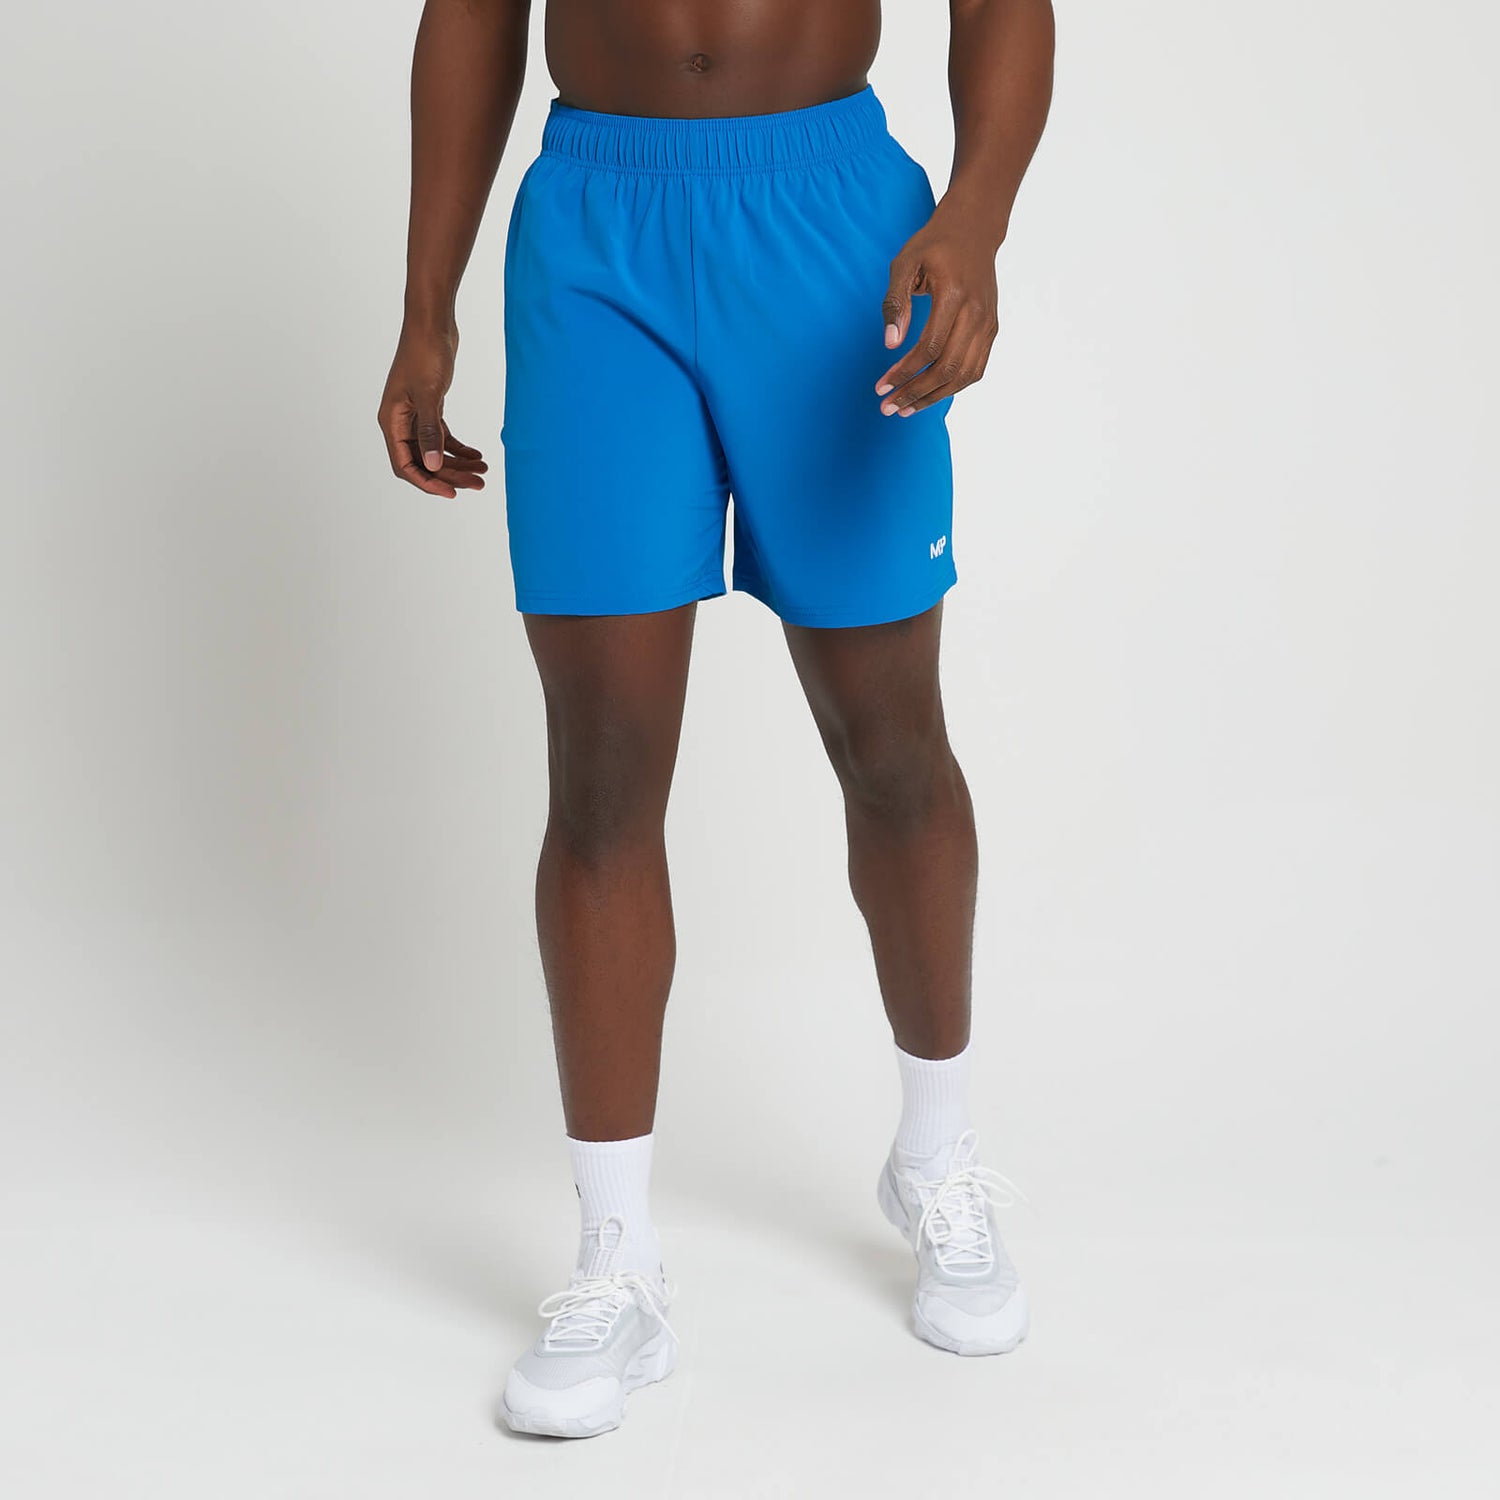 MP Men's Woven Training Shorts - True Blue - S